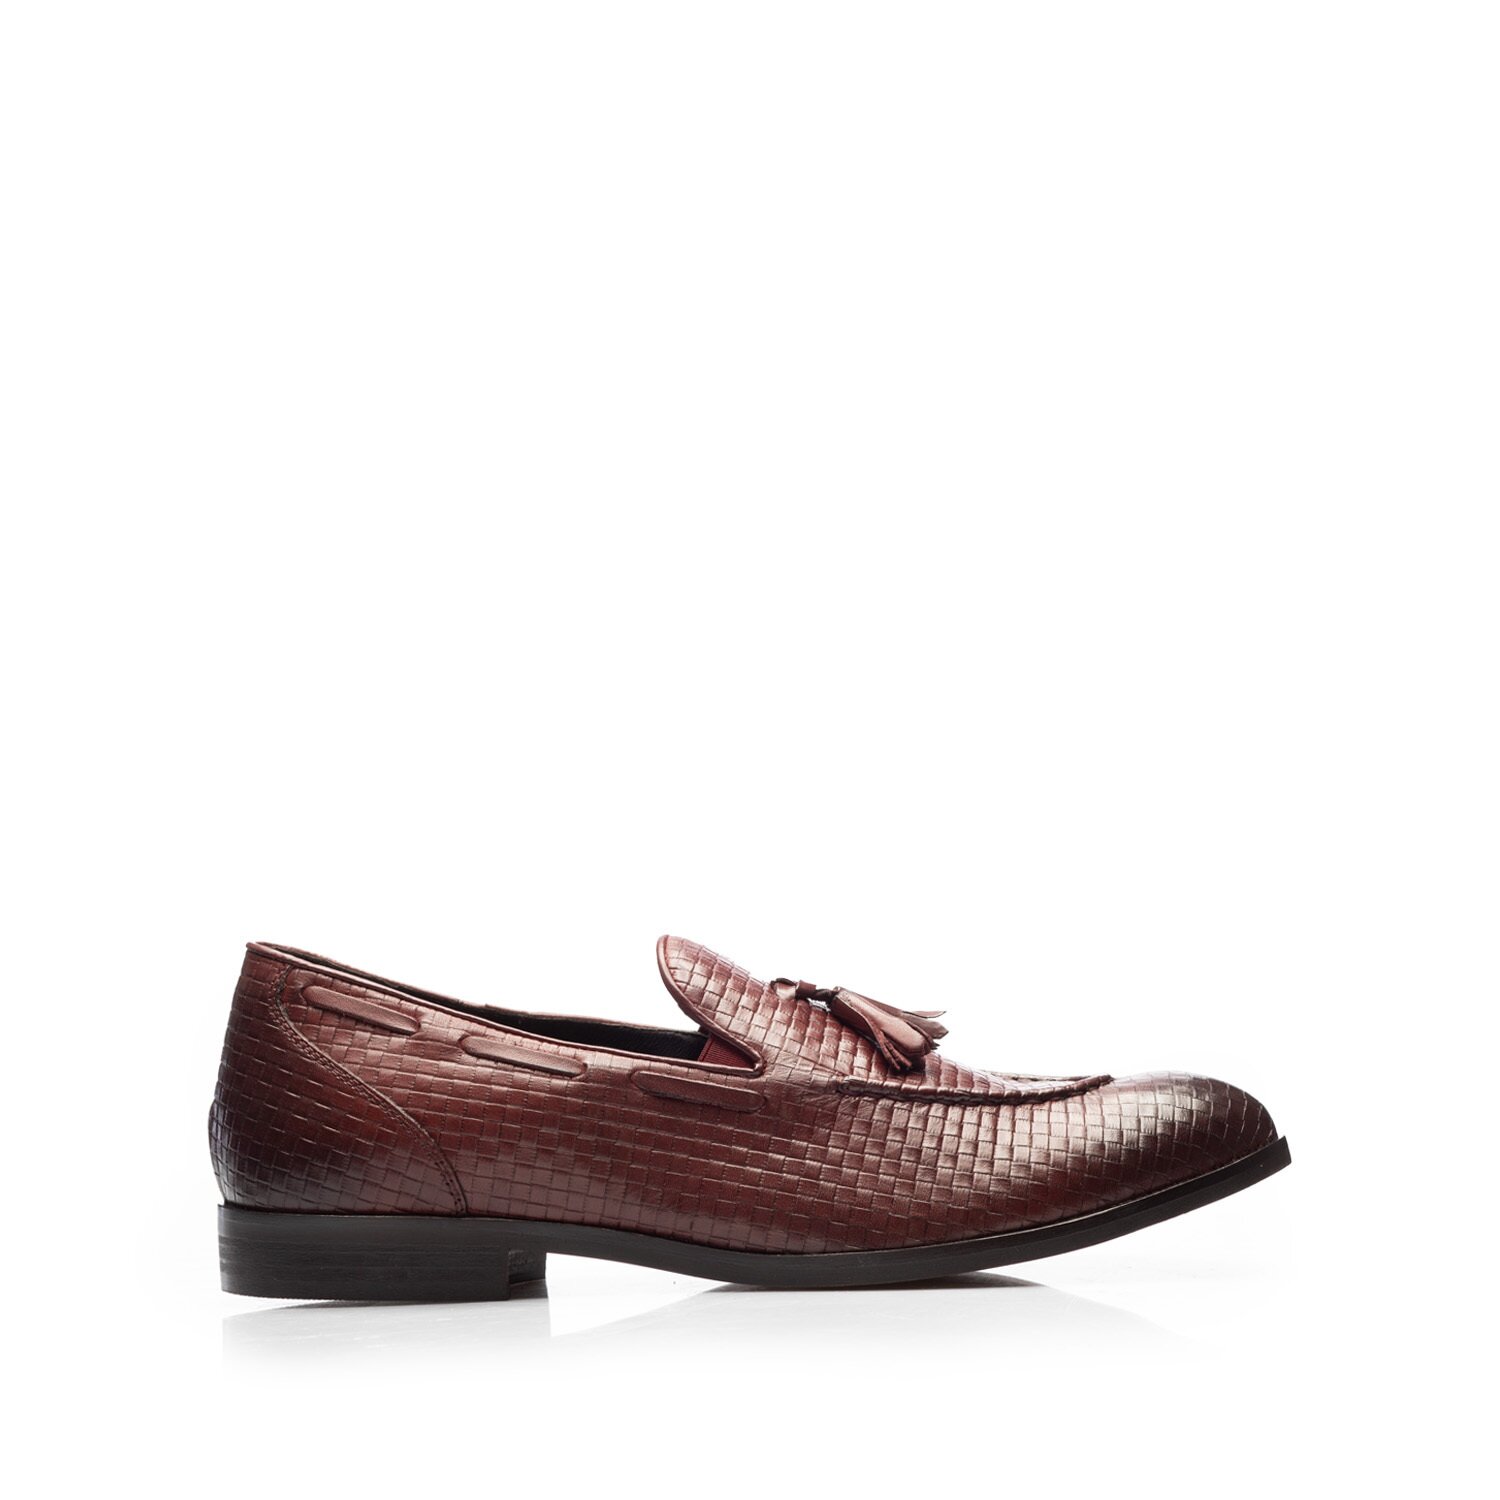 Pantofi eleganti barbati din piele naturala, Leofex - Mostra 558-1 visiniu box